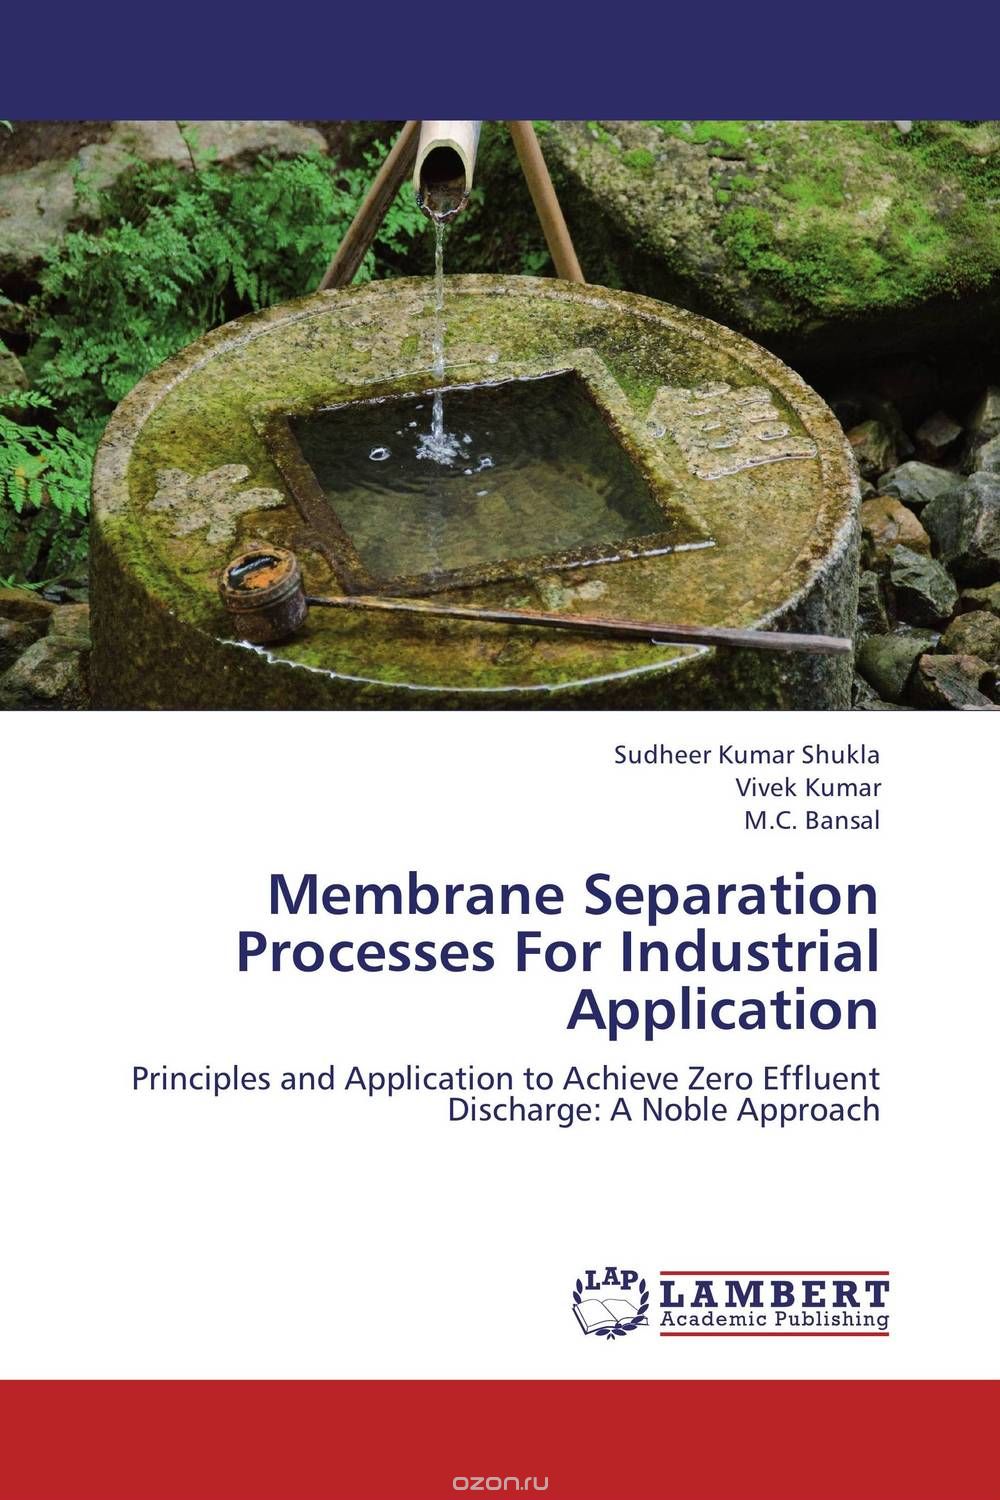 Скачать книгу "Membrane Separation Processes For Industrial Application"